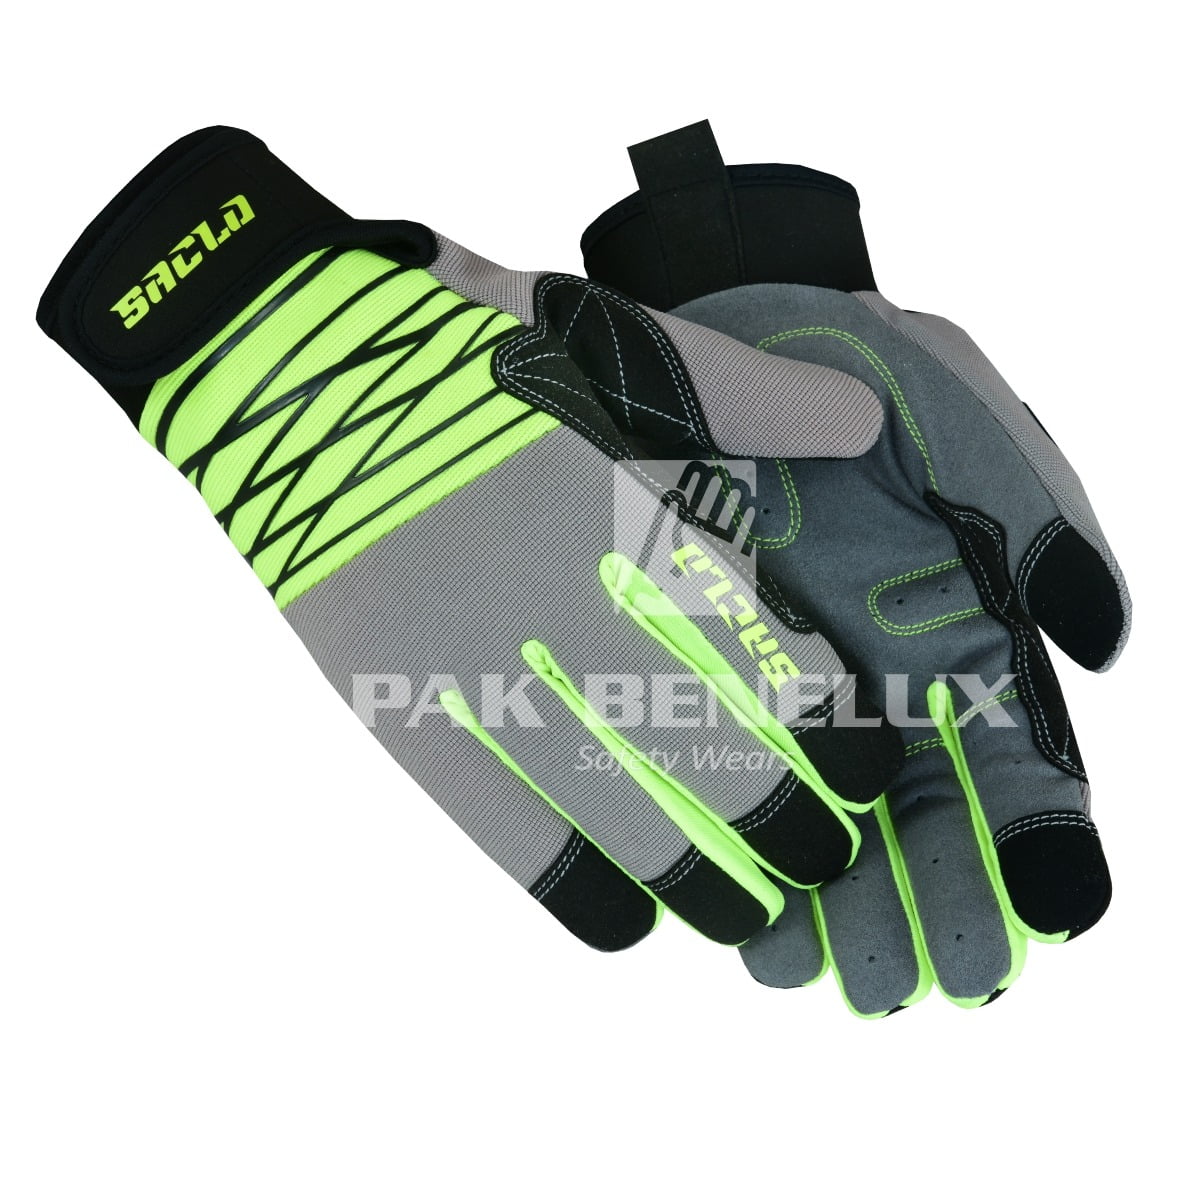 Mecahinc Gloves Manufacturer in Pakistan